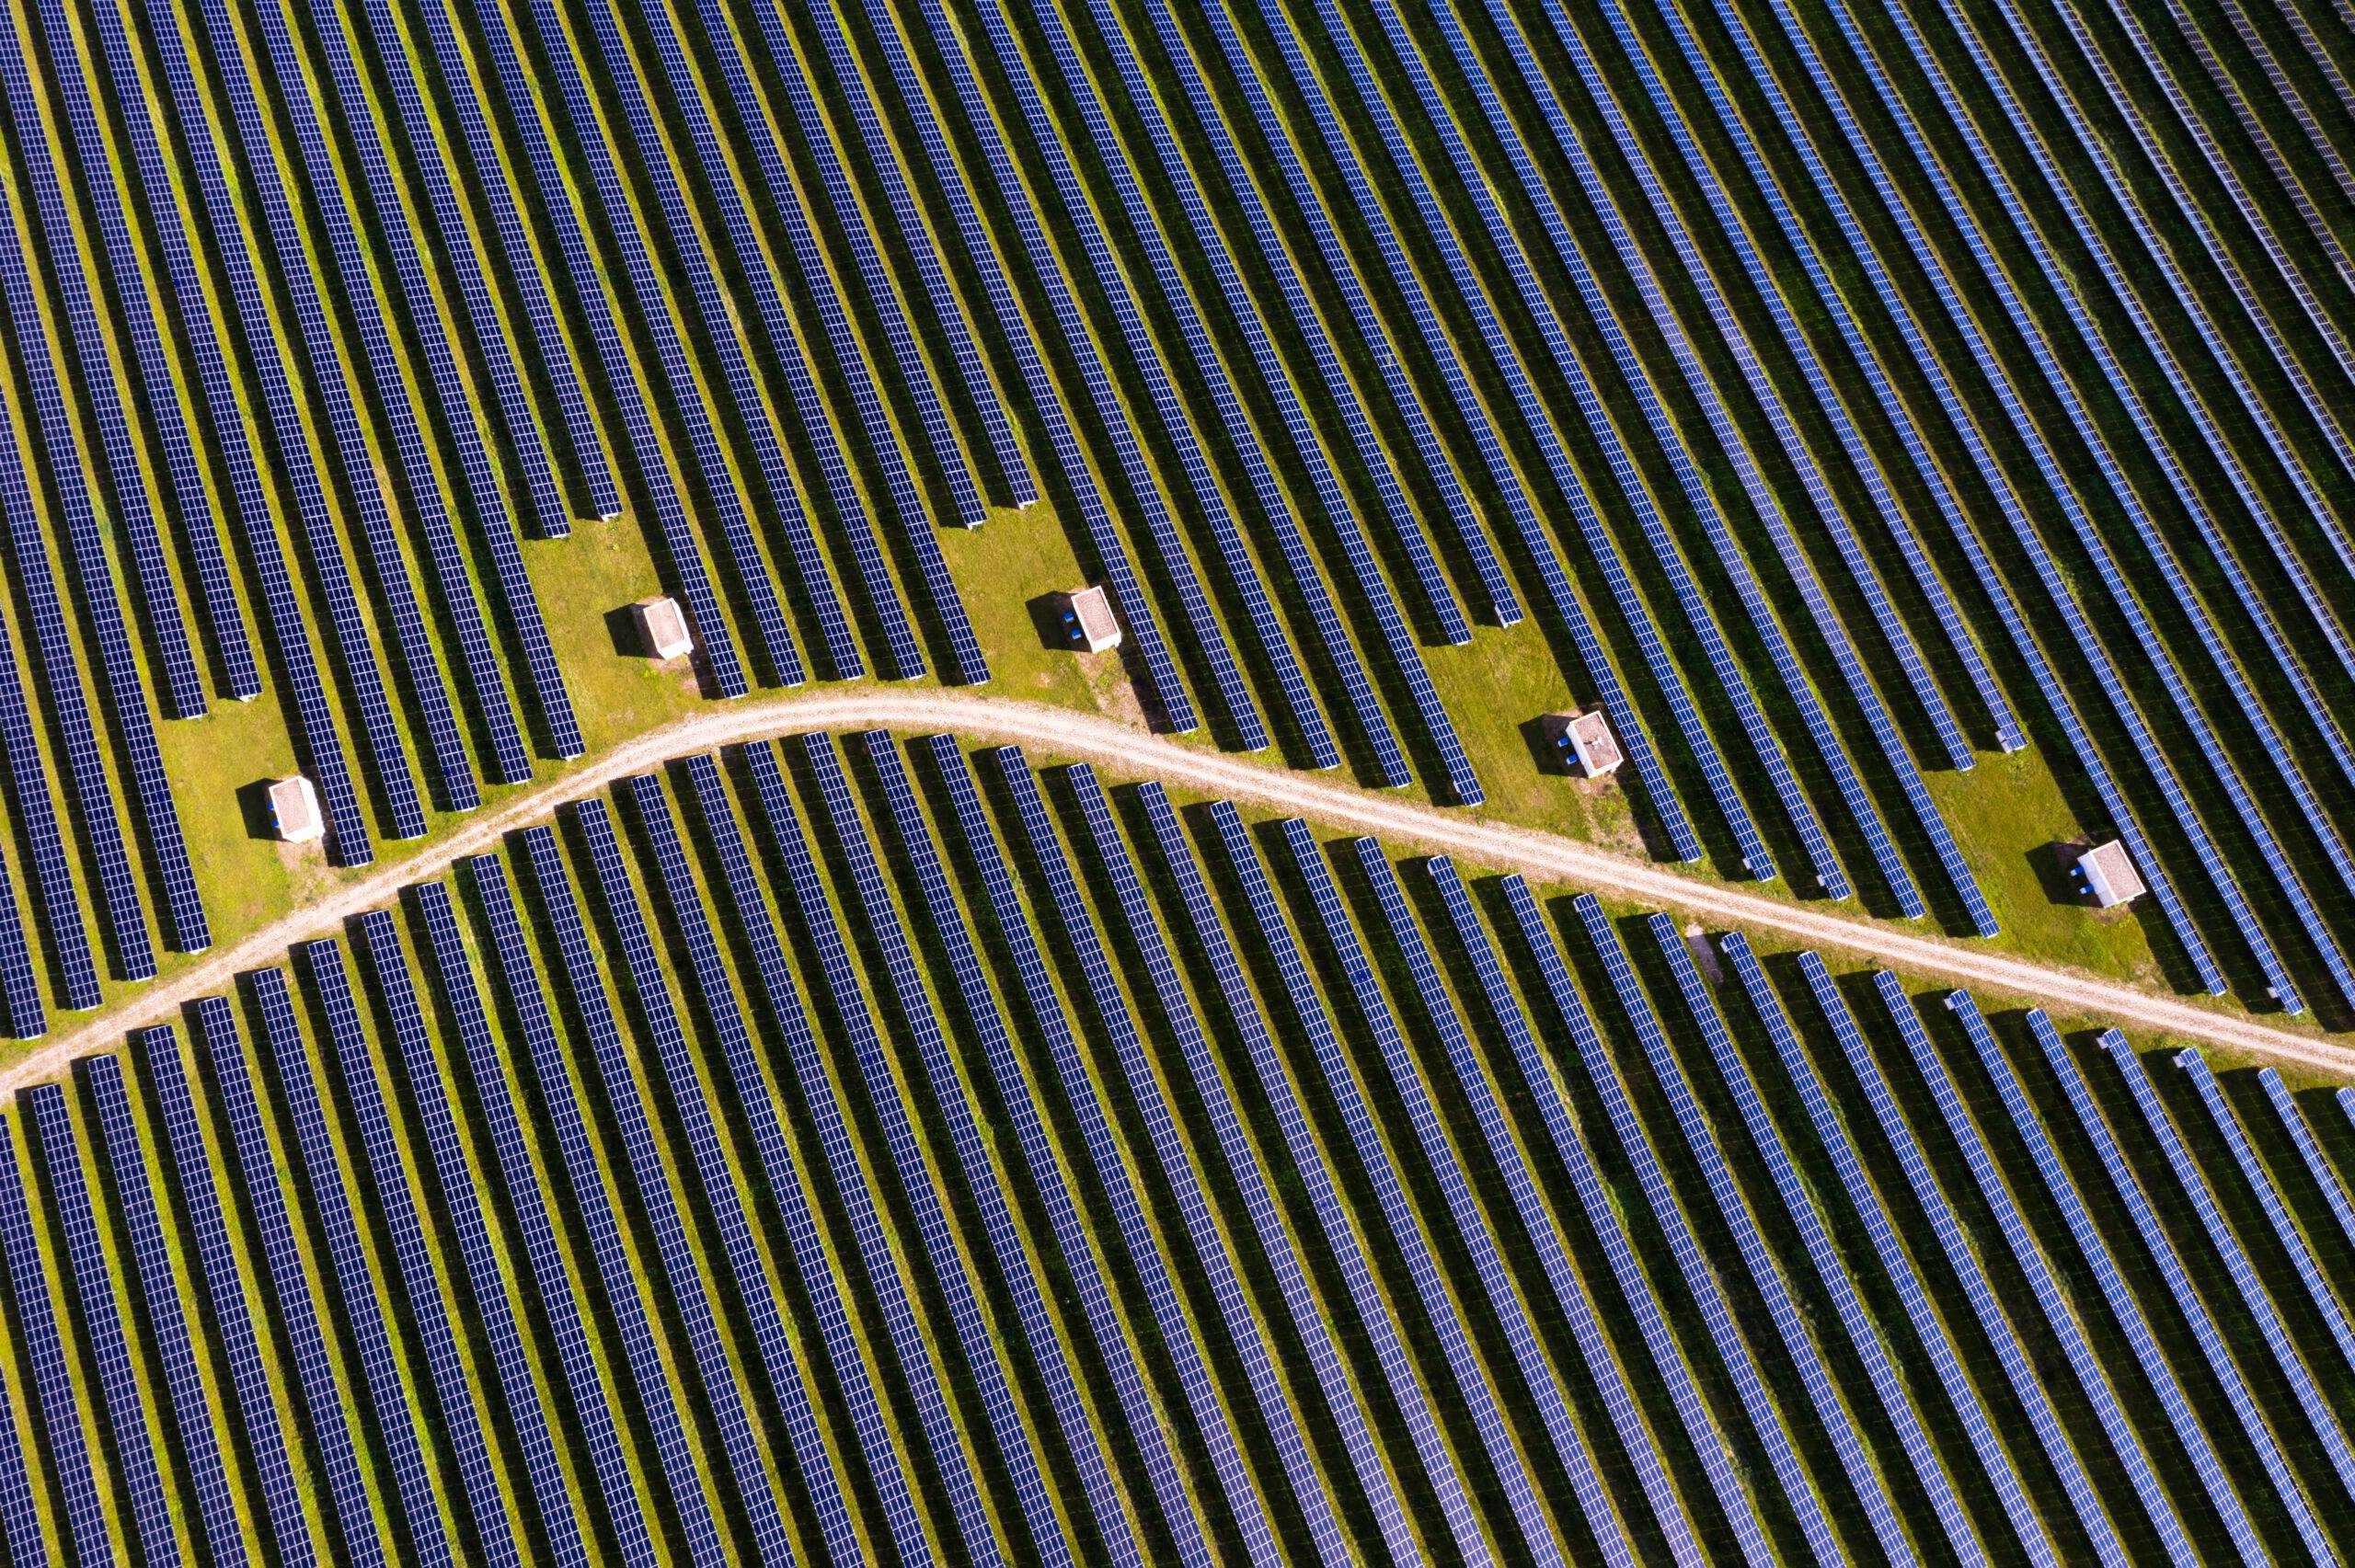 Renewable energy plants, aerial view of solar panels.